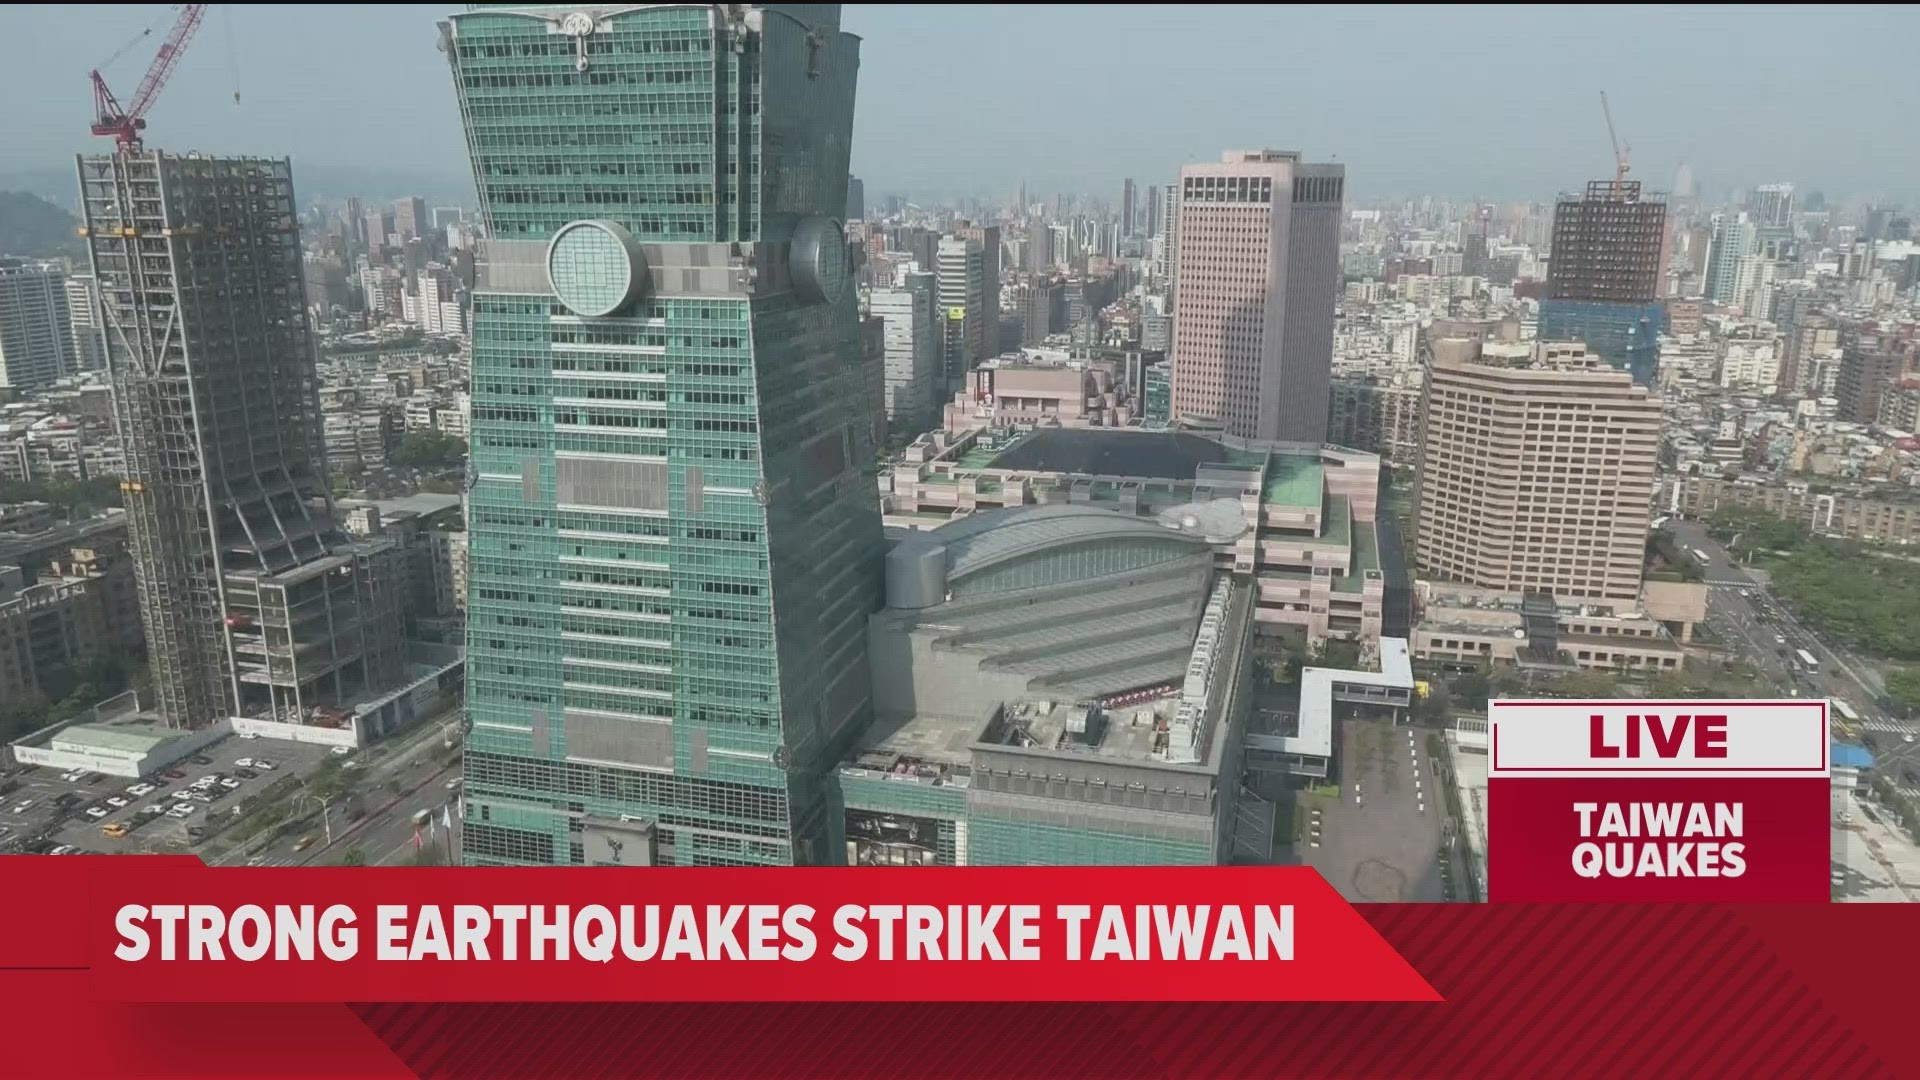 A 7.5 earthquake rocked Taiwan Tuesday. There is no tsunami danger for Oregon, Washington, California, British Columbia or Alaska, the National Weather Service said.